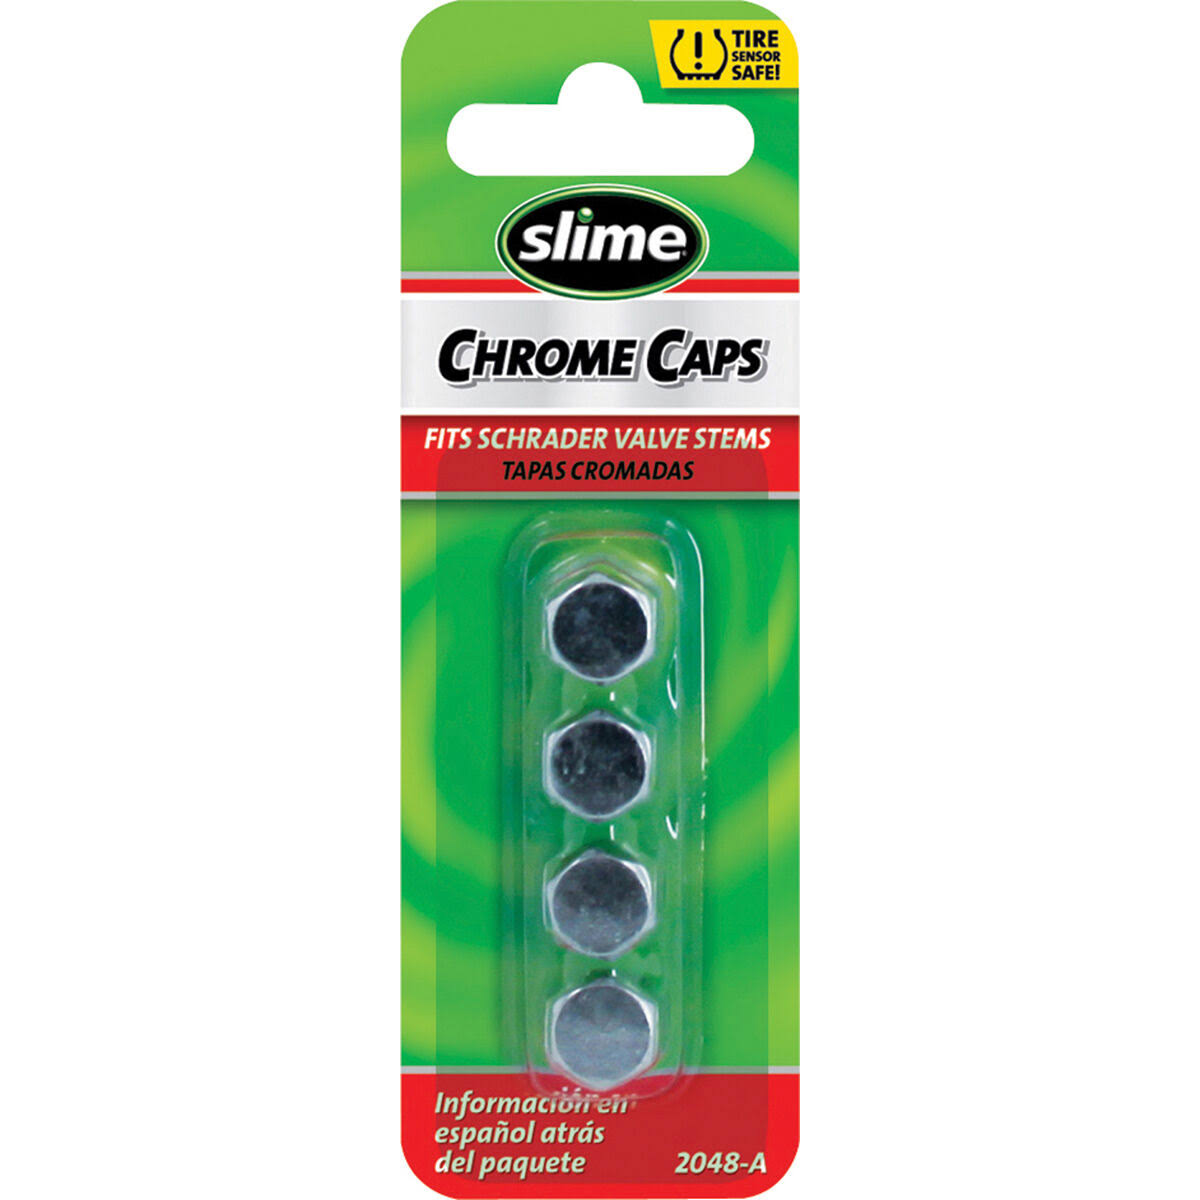 Slime Tire Valve Cap - Chrome